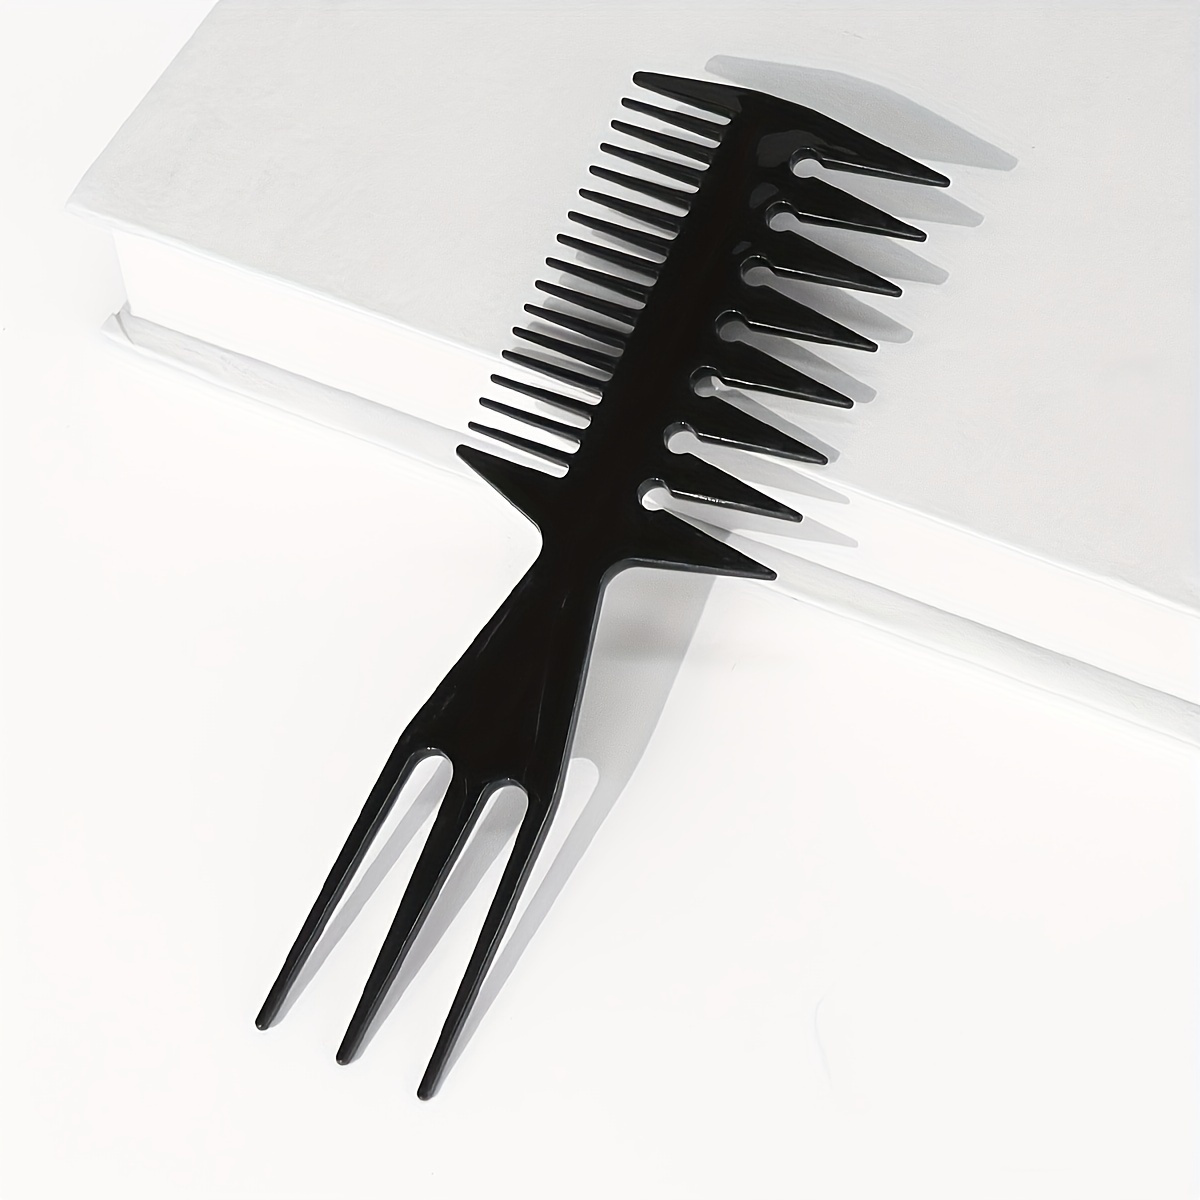 2023 - Fishbone Comb 3-way High-gloss Strip Comb Weave Strip Perm Comb  Styling Hair